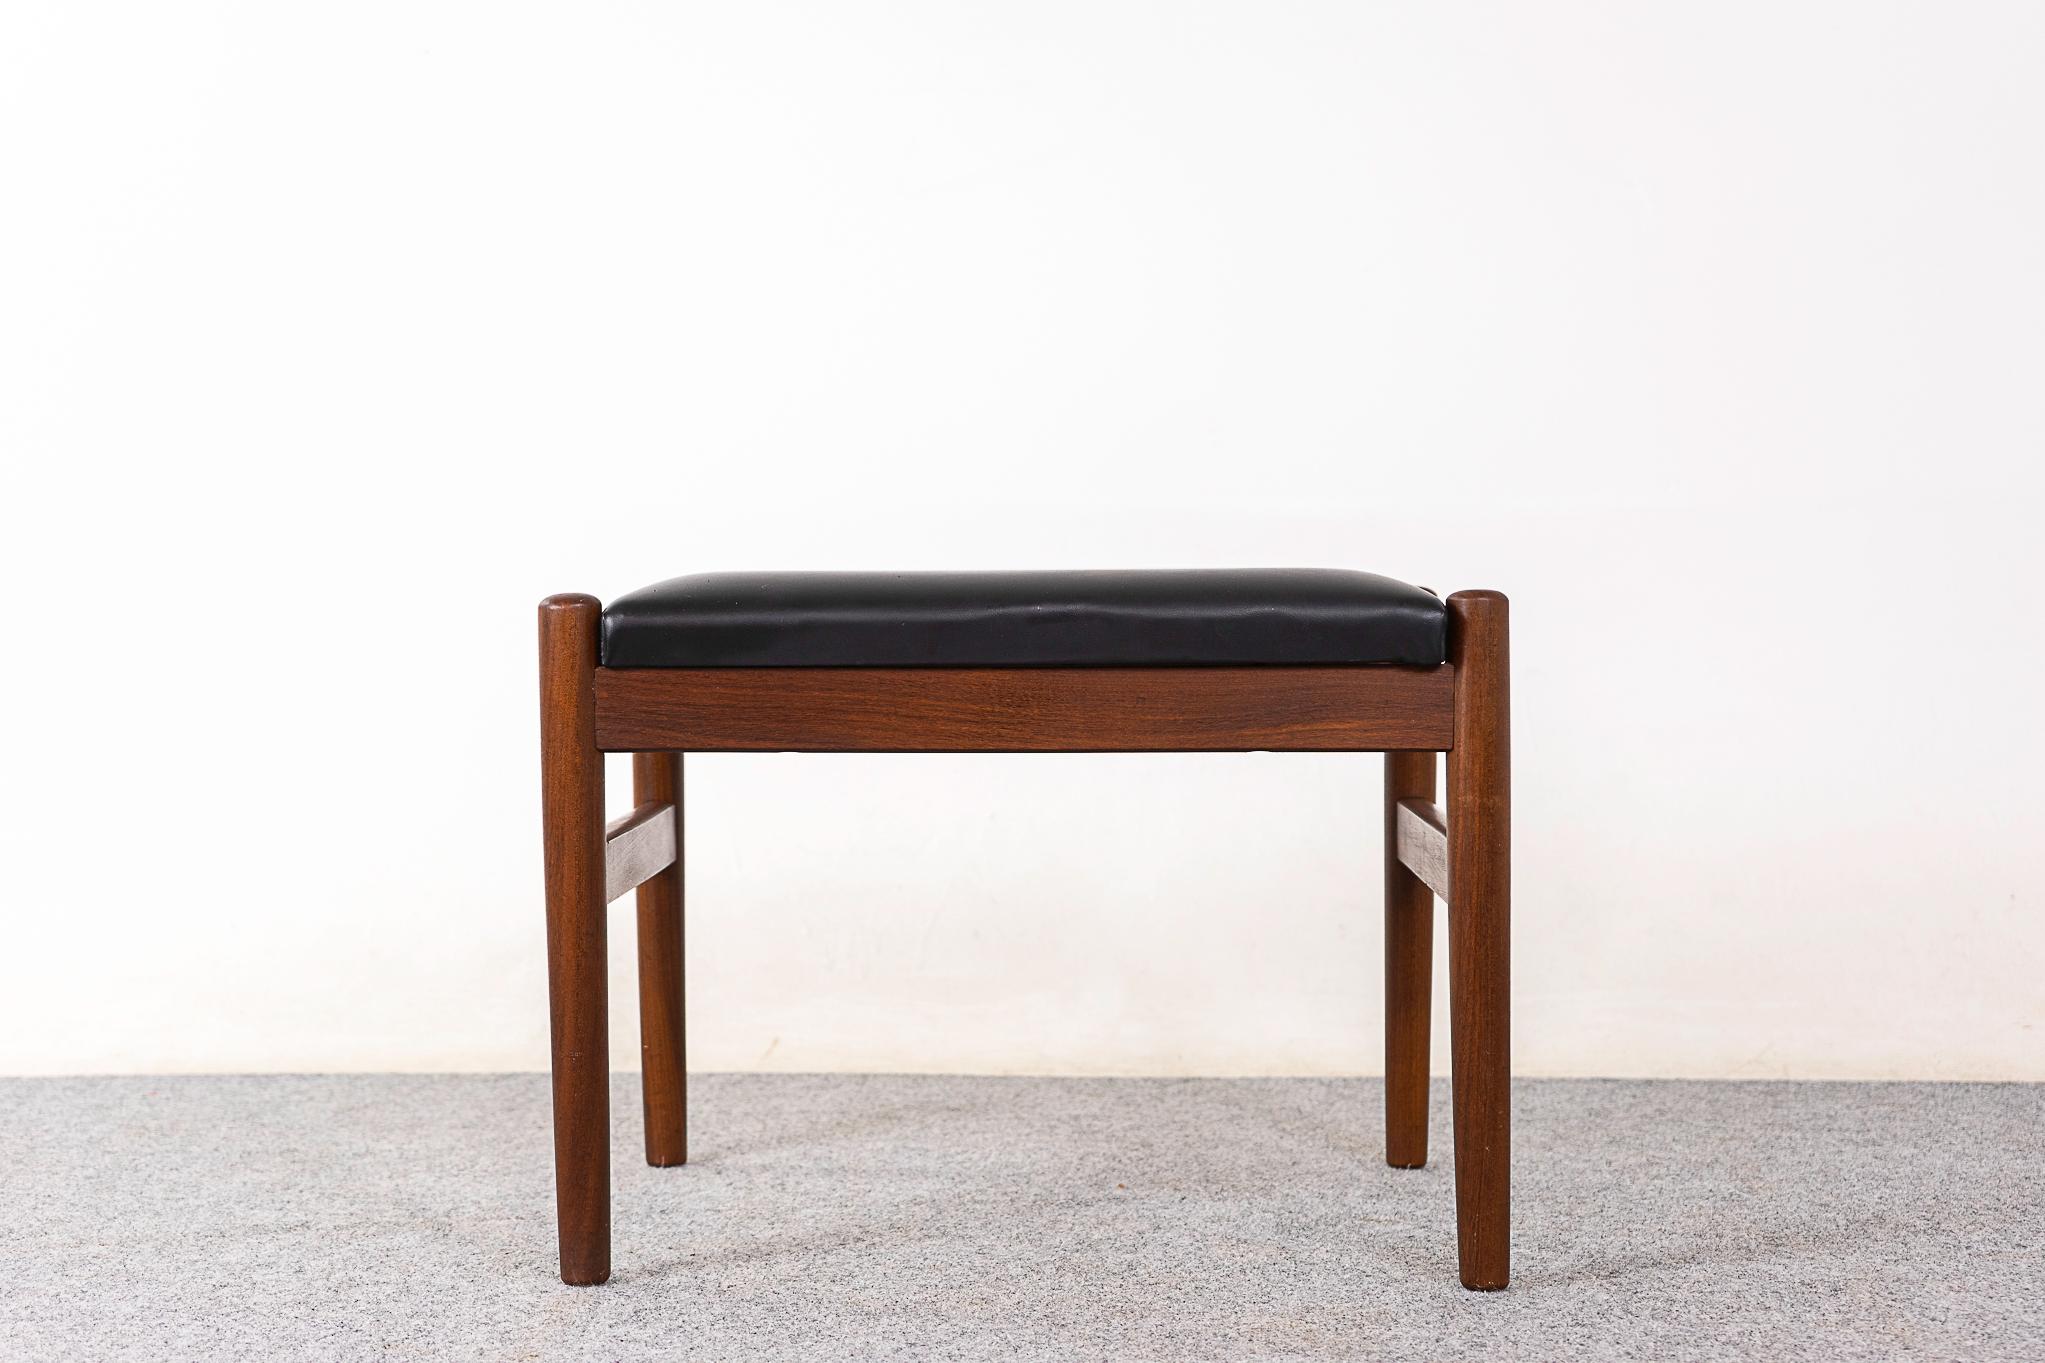 Teak Danish footstool, circa 1960's. Elegent, robust design with cross supports. Original black vinyl uphostery.


